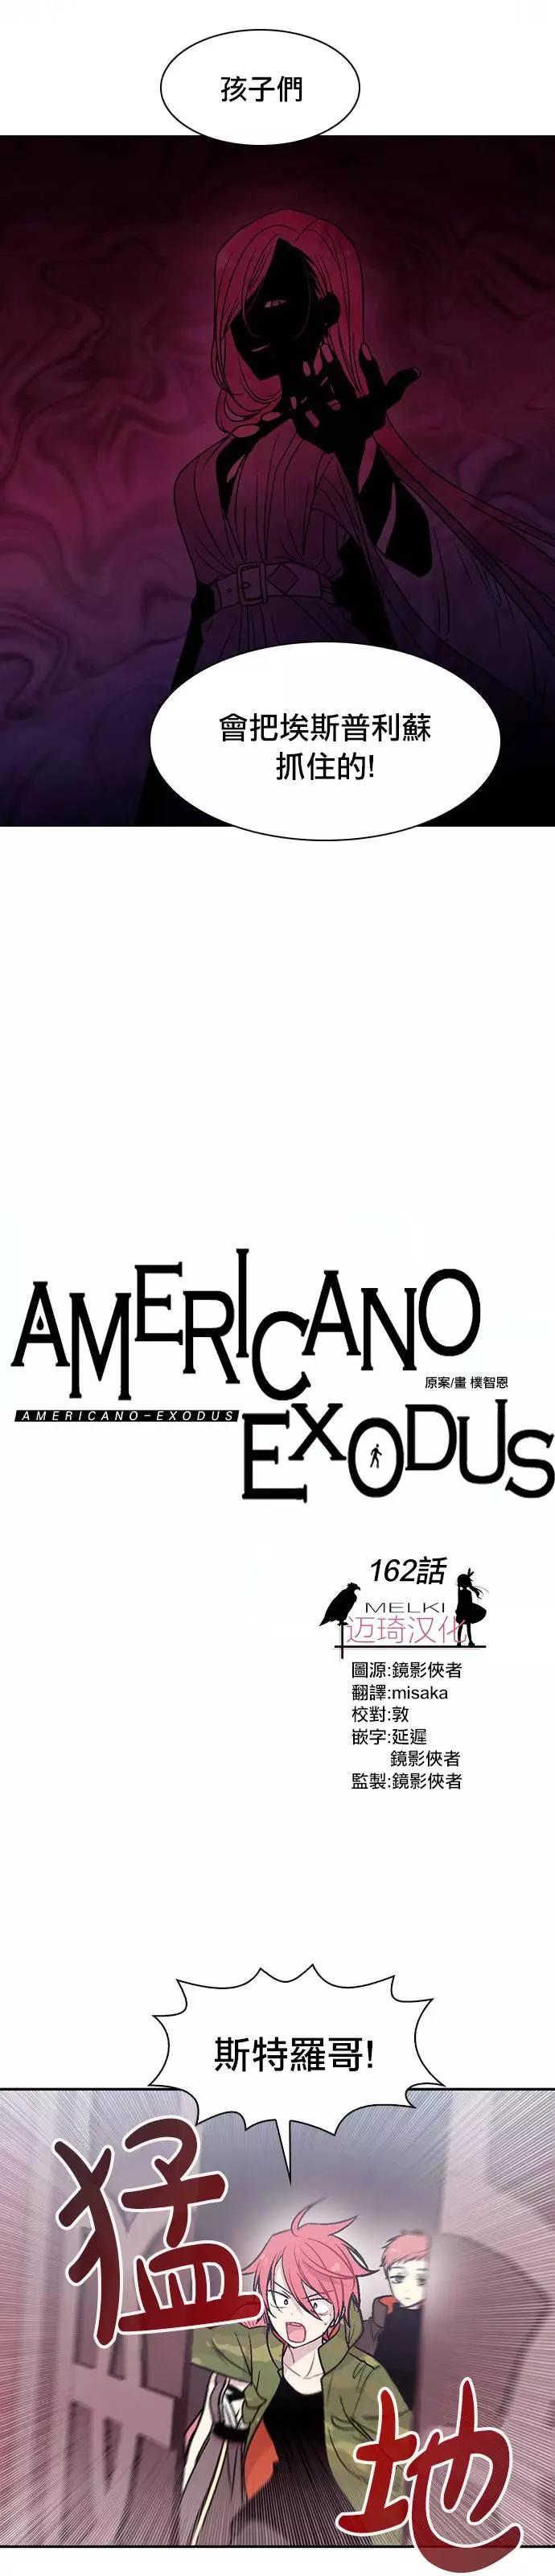 Americano-exodus - 第162回 - 2